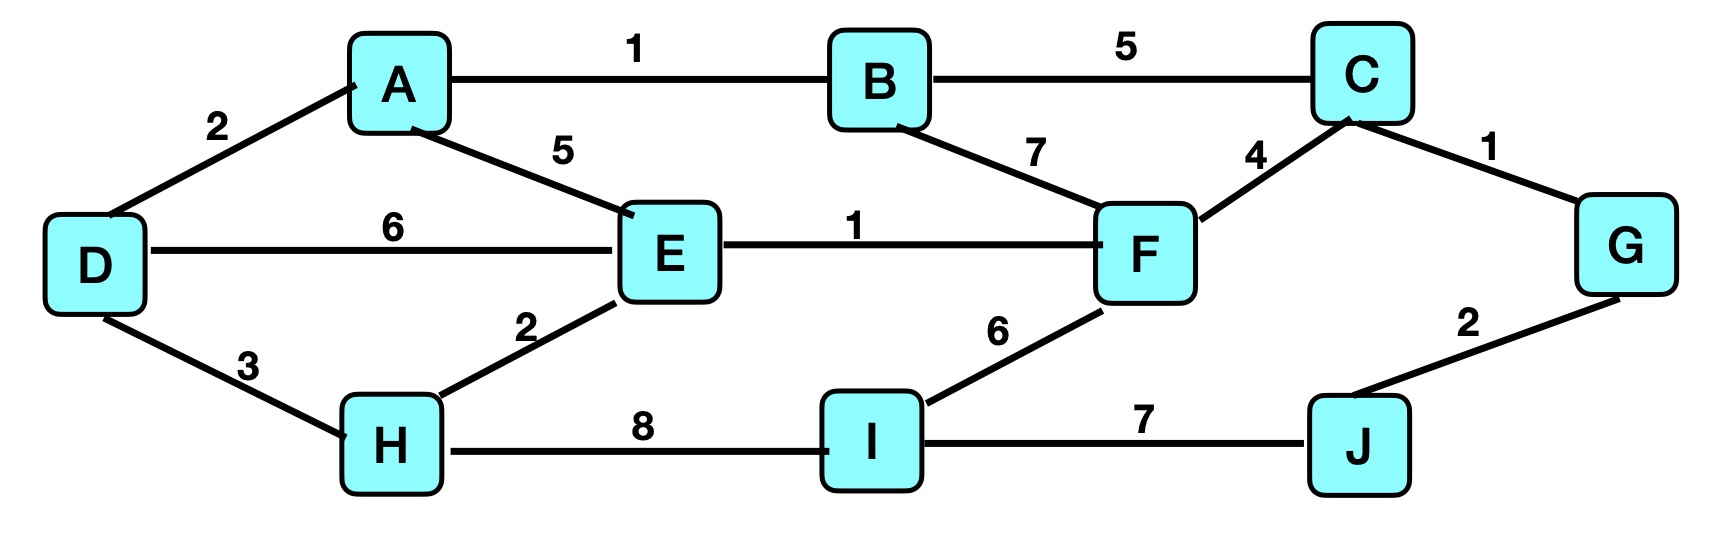 Graph B